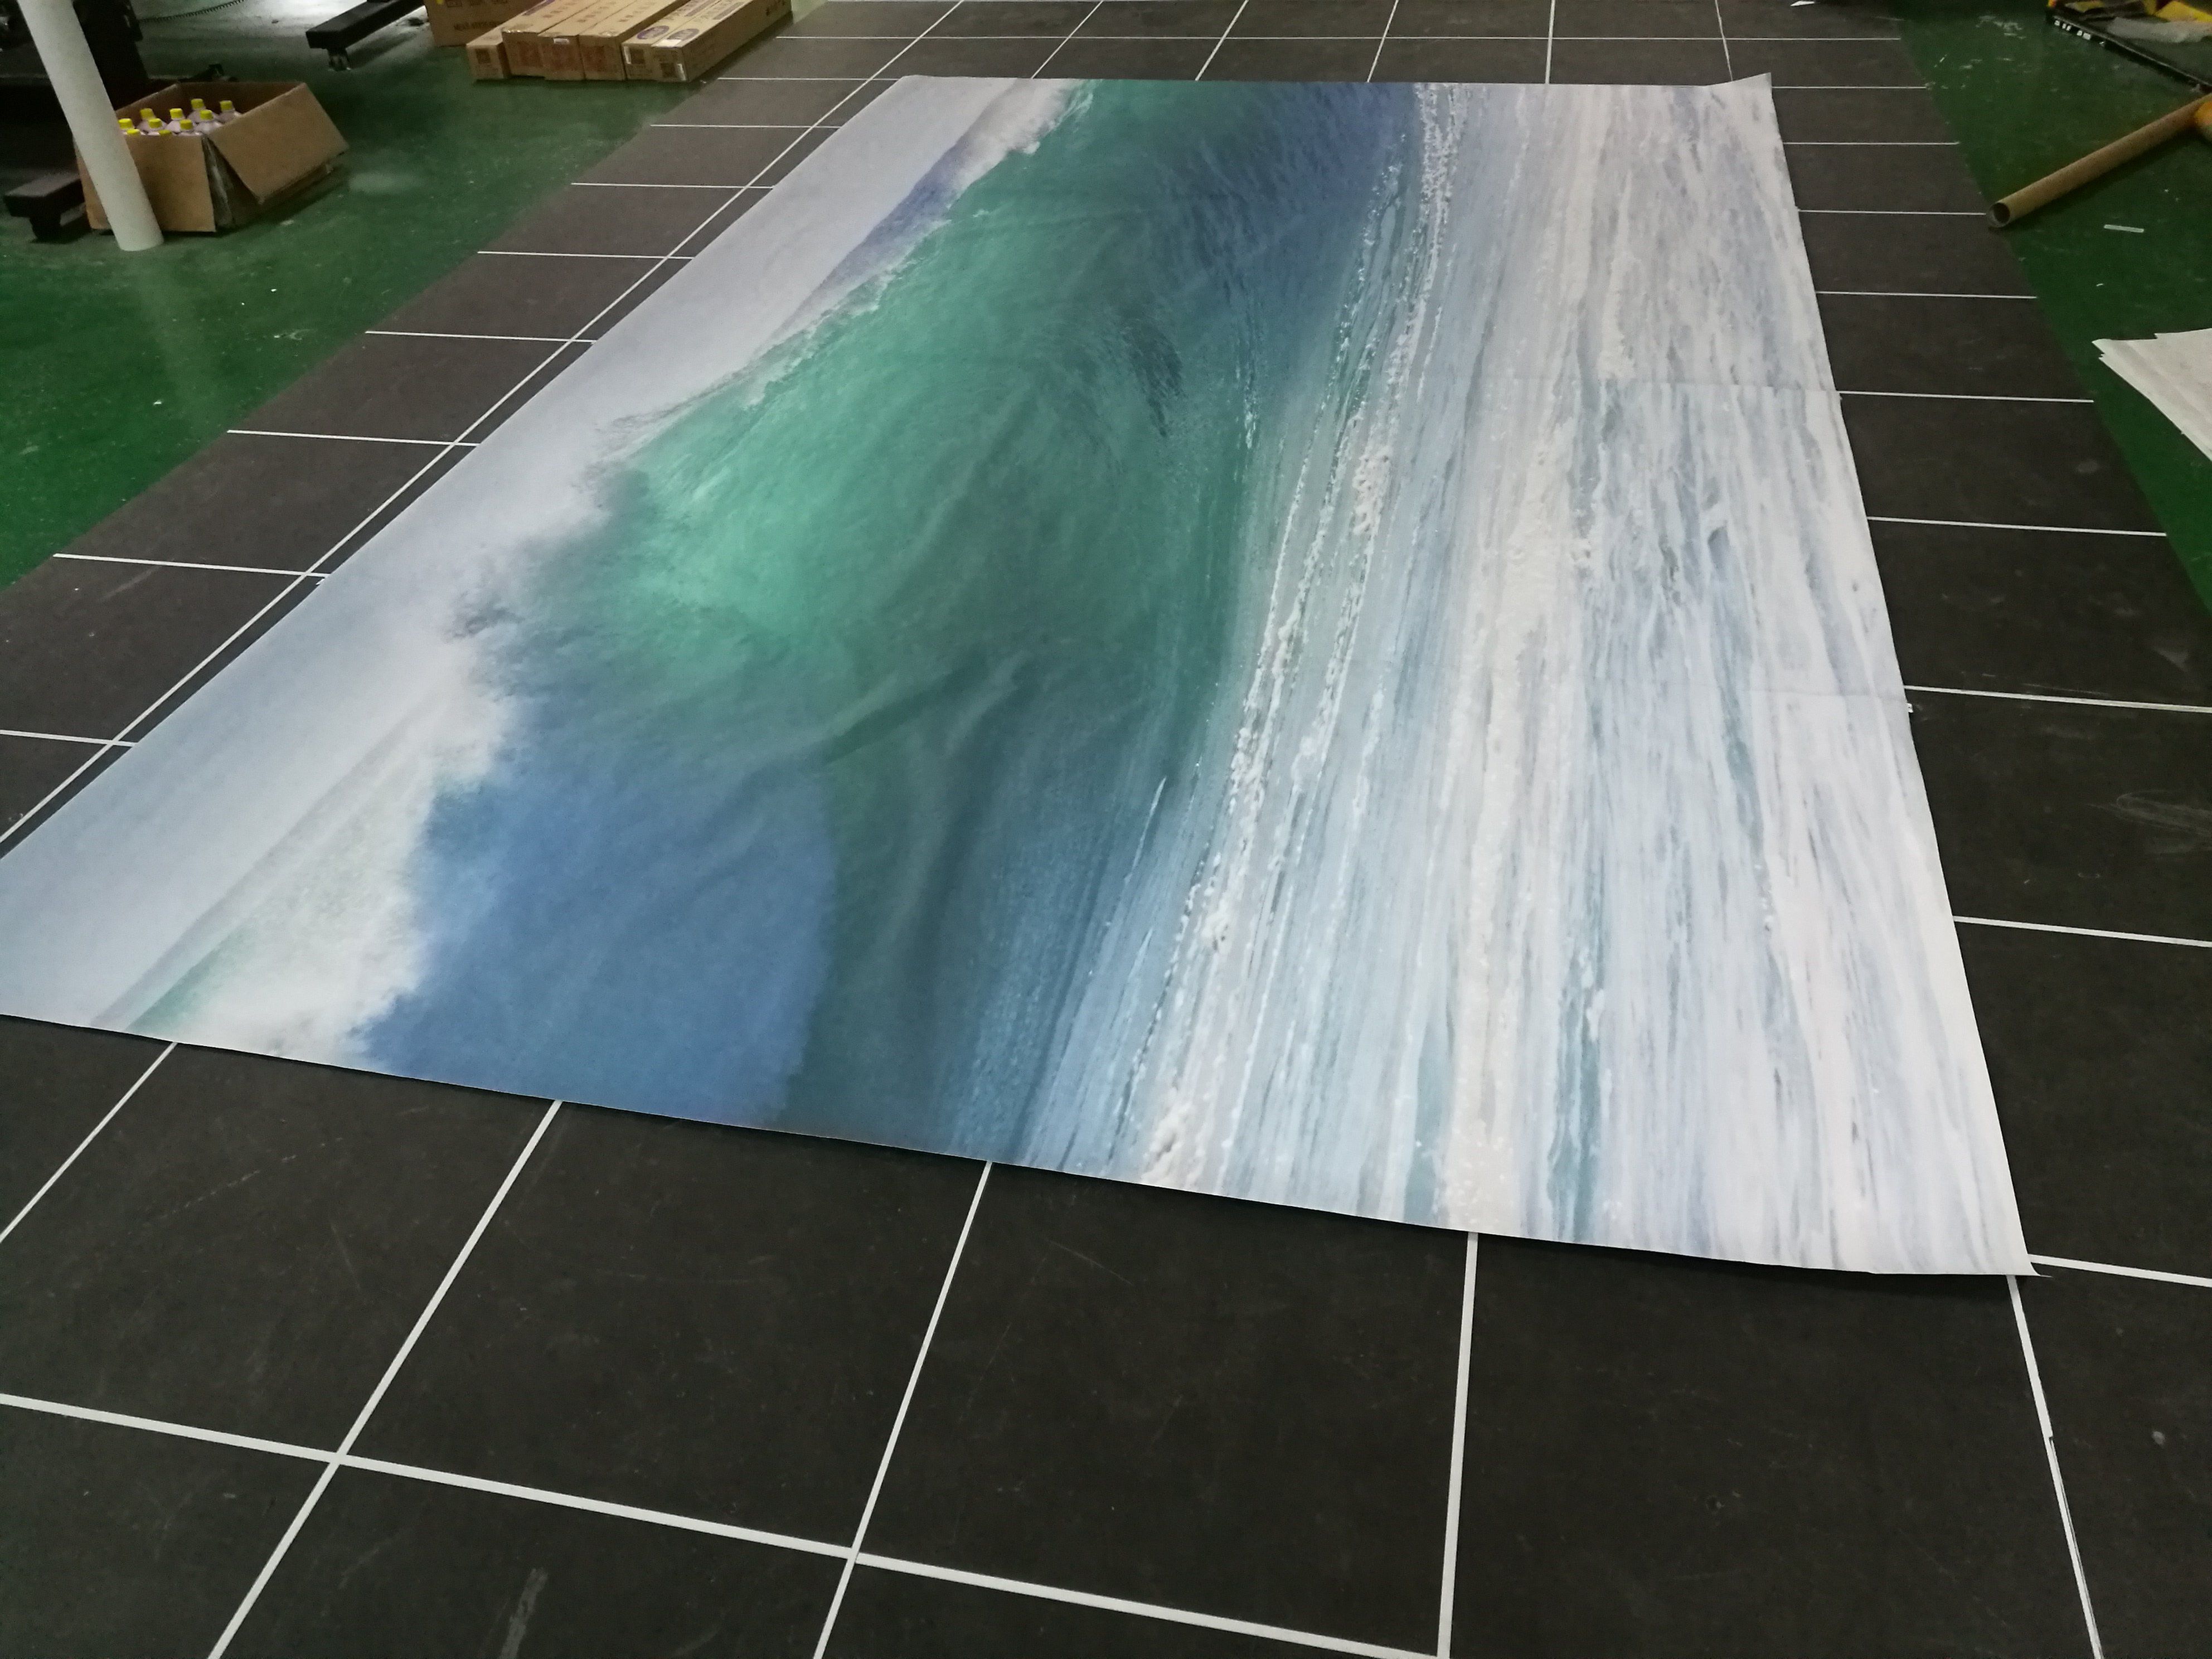 Ocean Wave Wallpaper AJ Wallpaper 